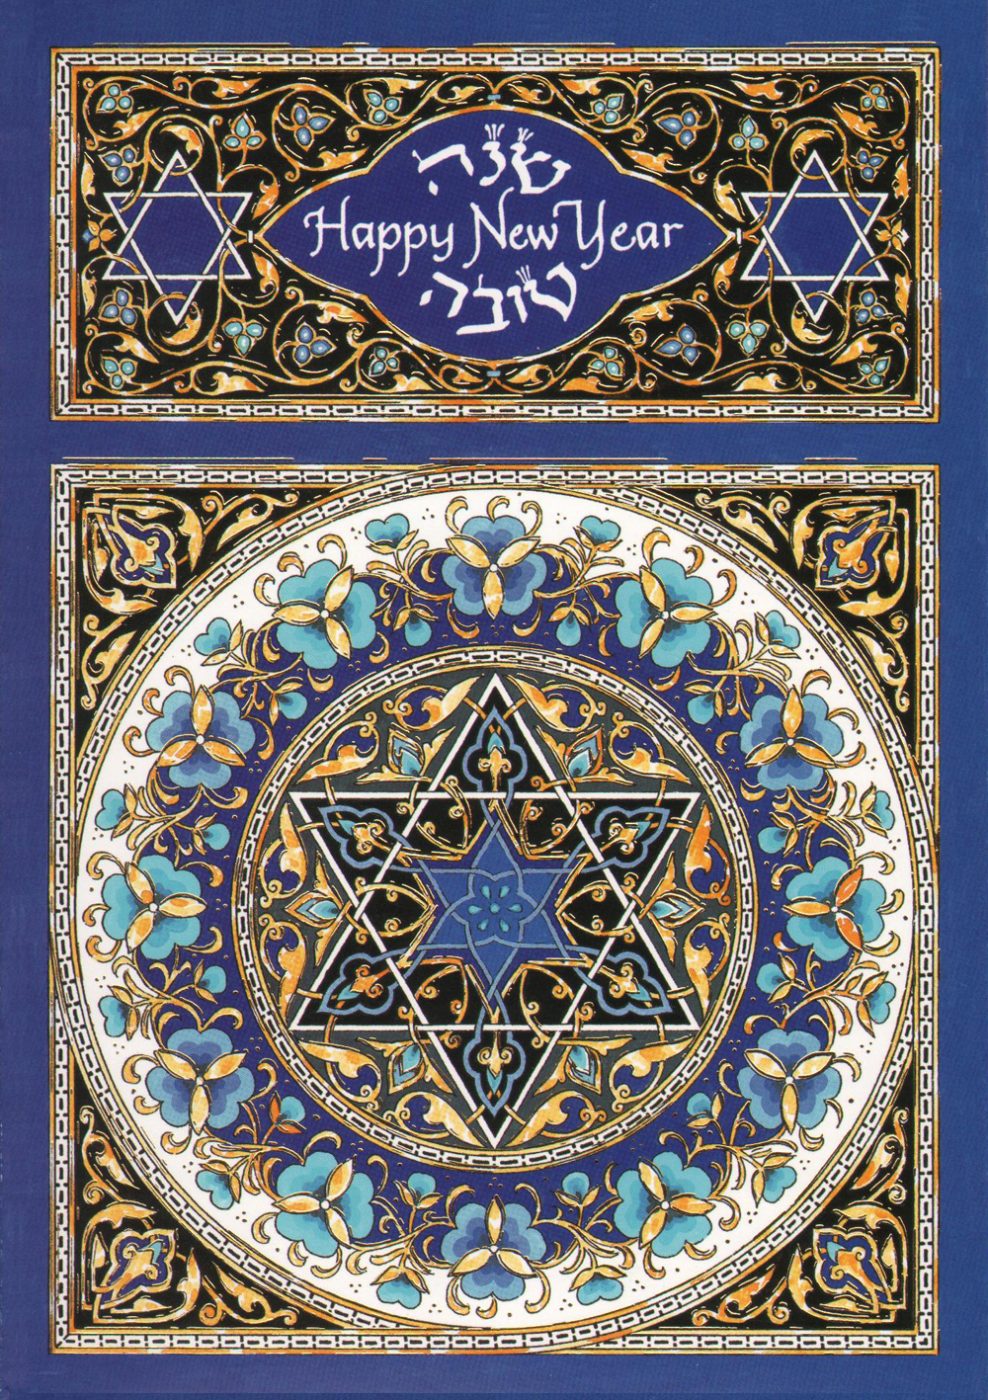 Jewish New Year Caspi Cards And Art